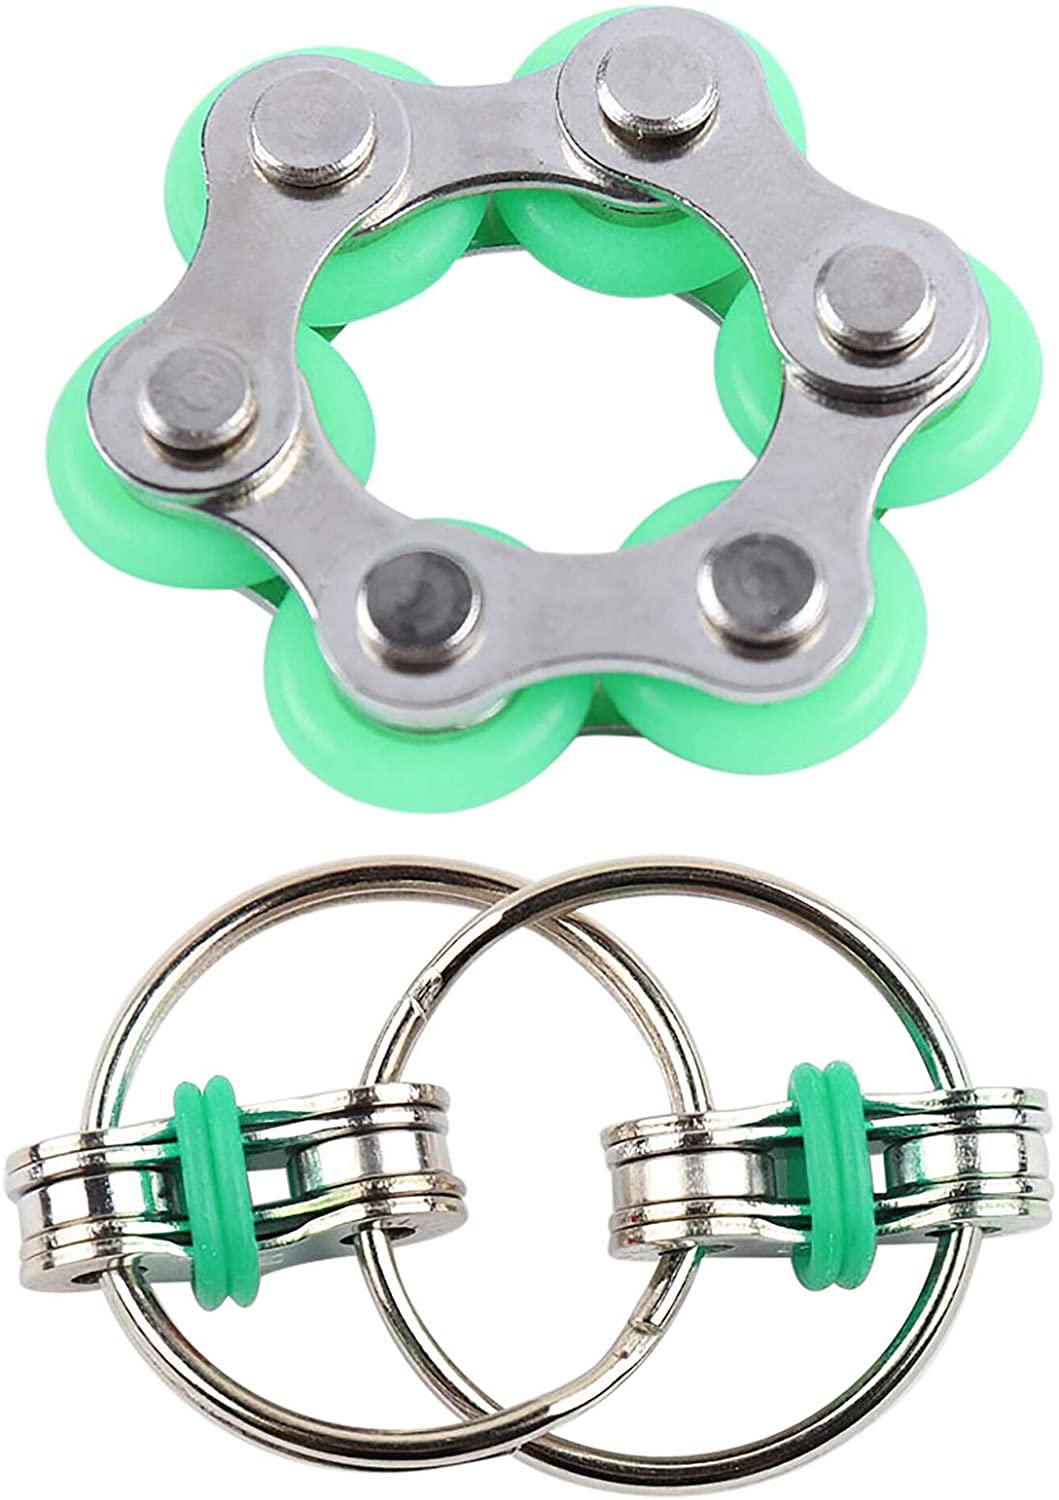 Bike Chain Fidget Stim Toy Set The Autistic Innovator Green Bundle 